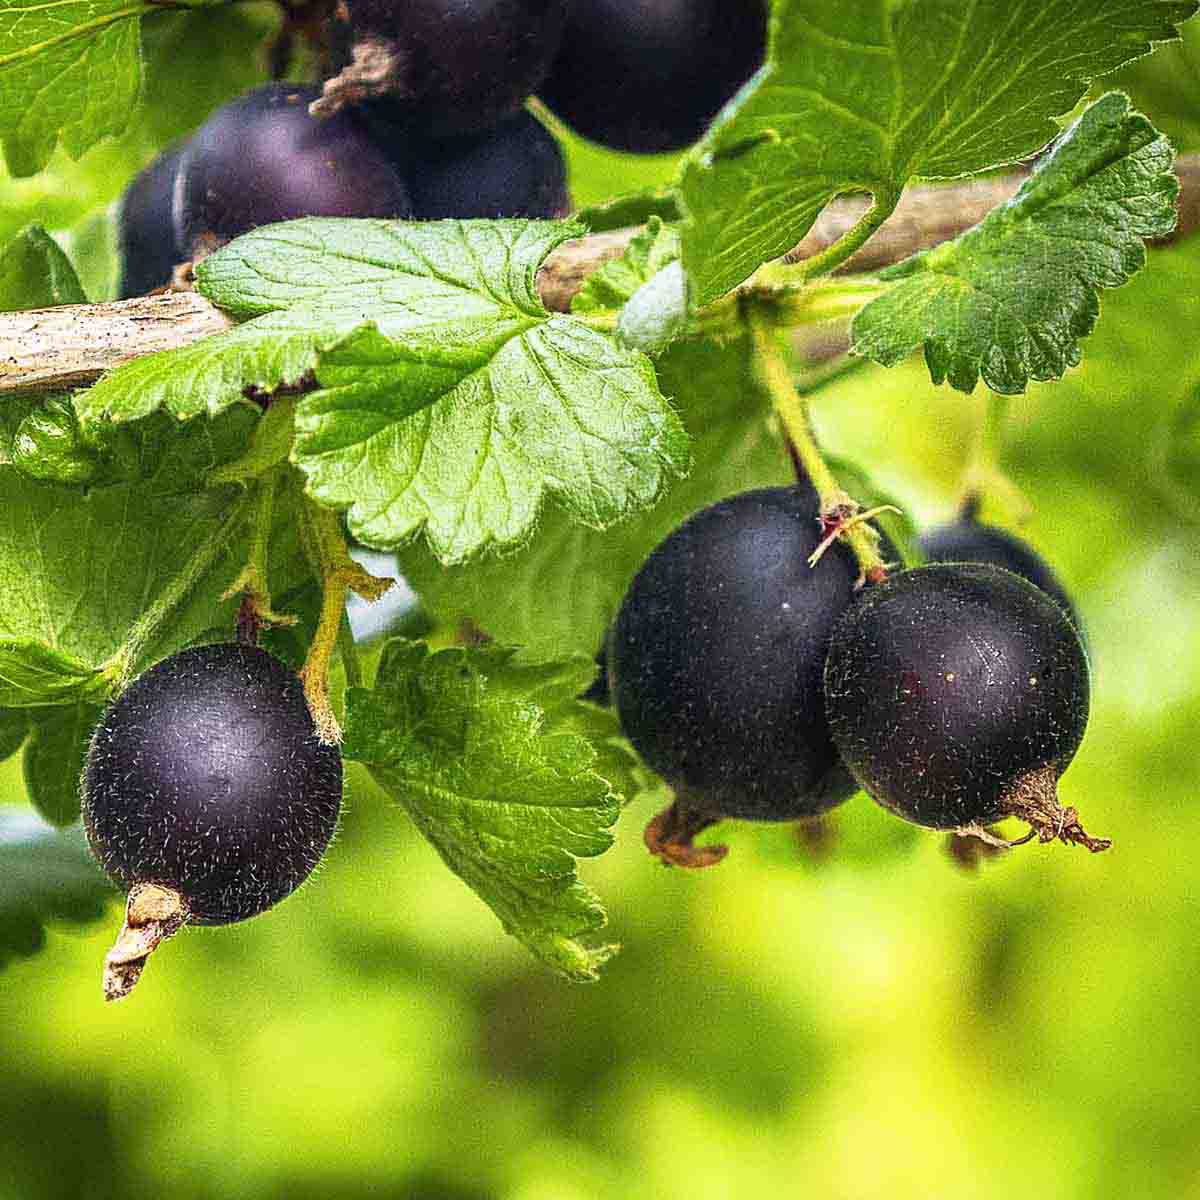 Ripe nearly black jostaberries on currant like jostaberry bush.